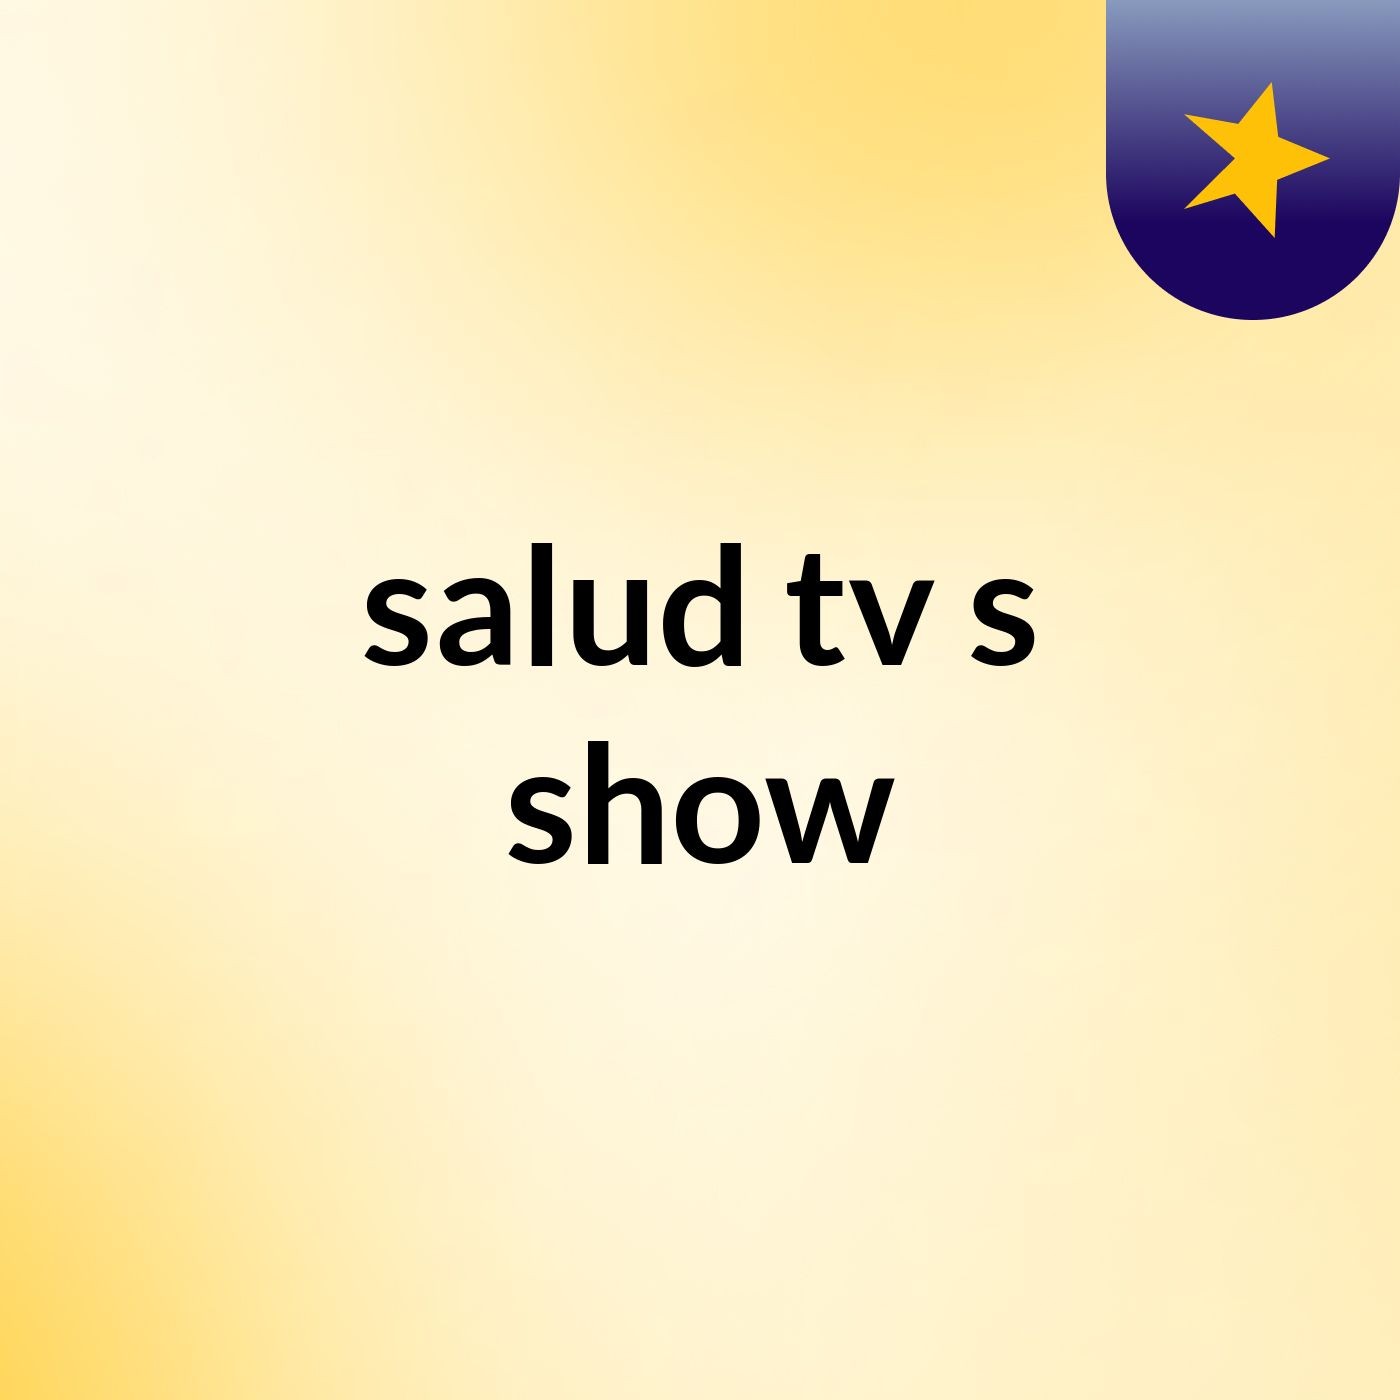 salud tv's show